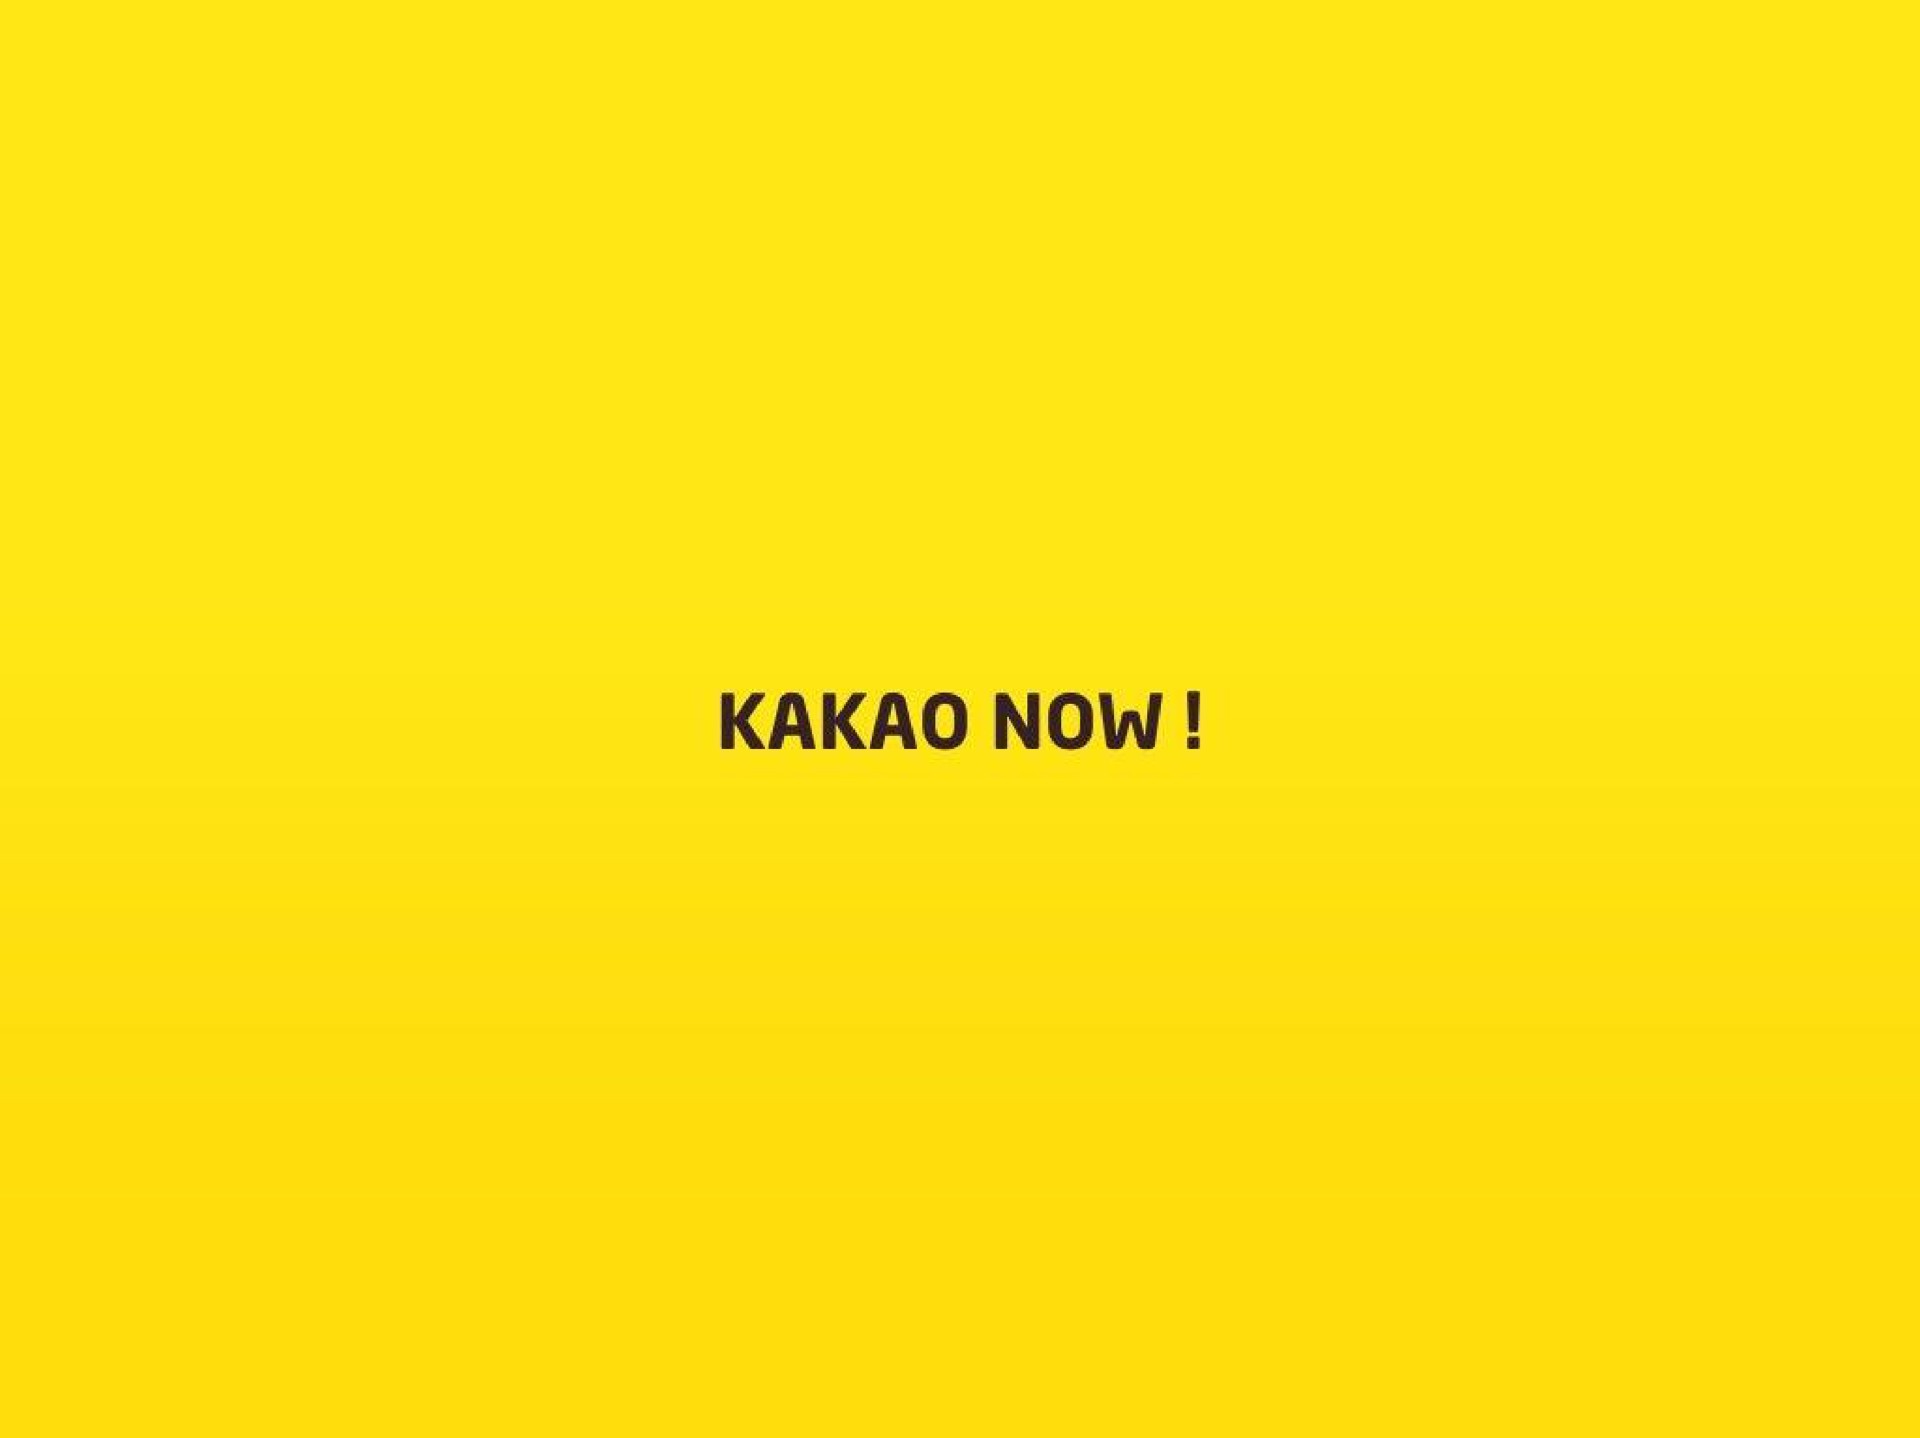 now | Kakao